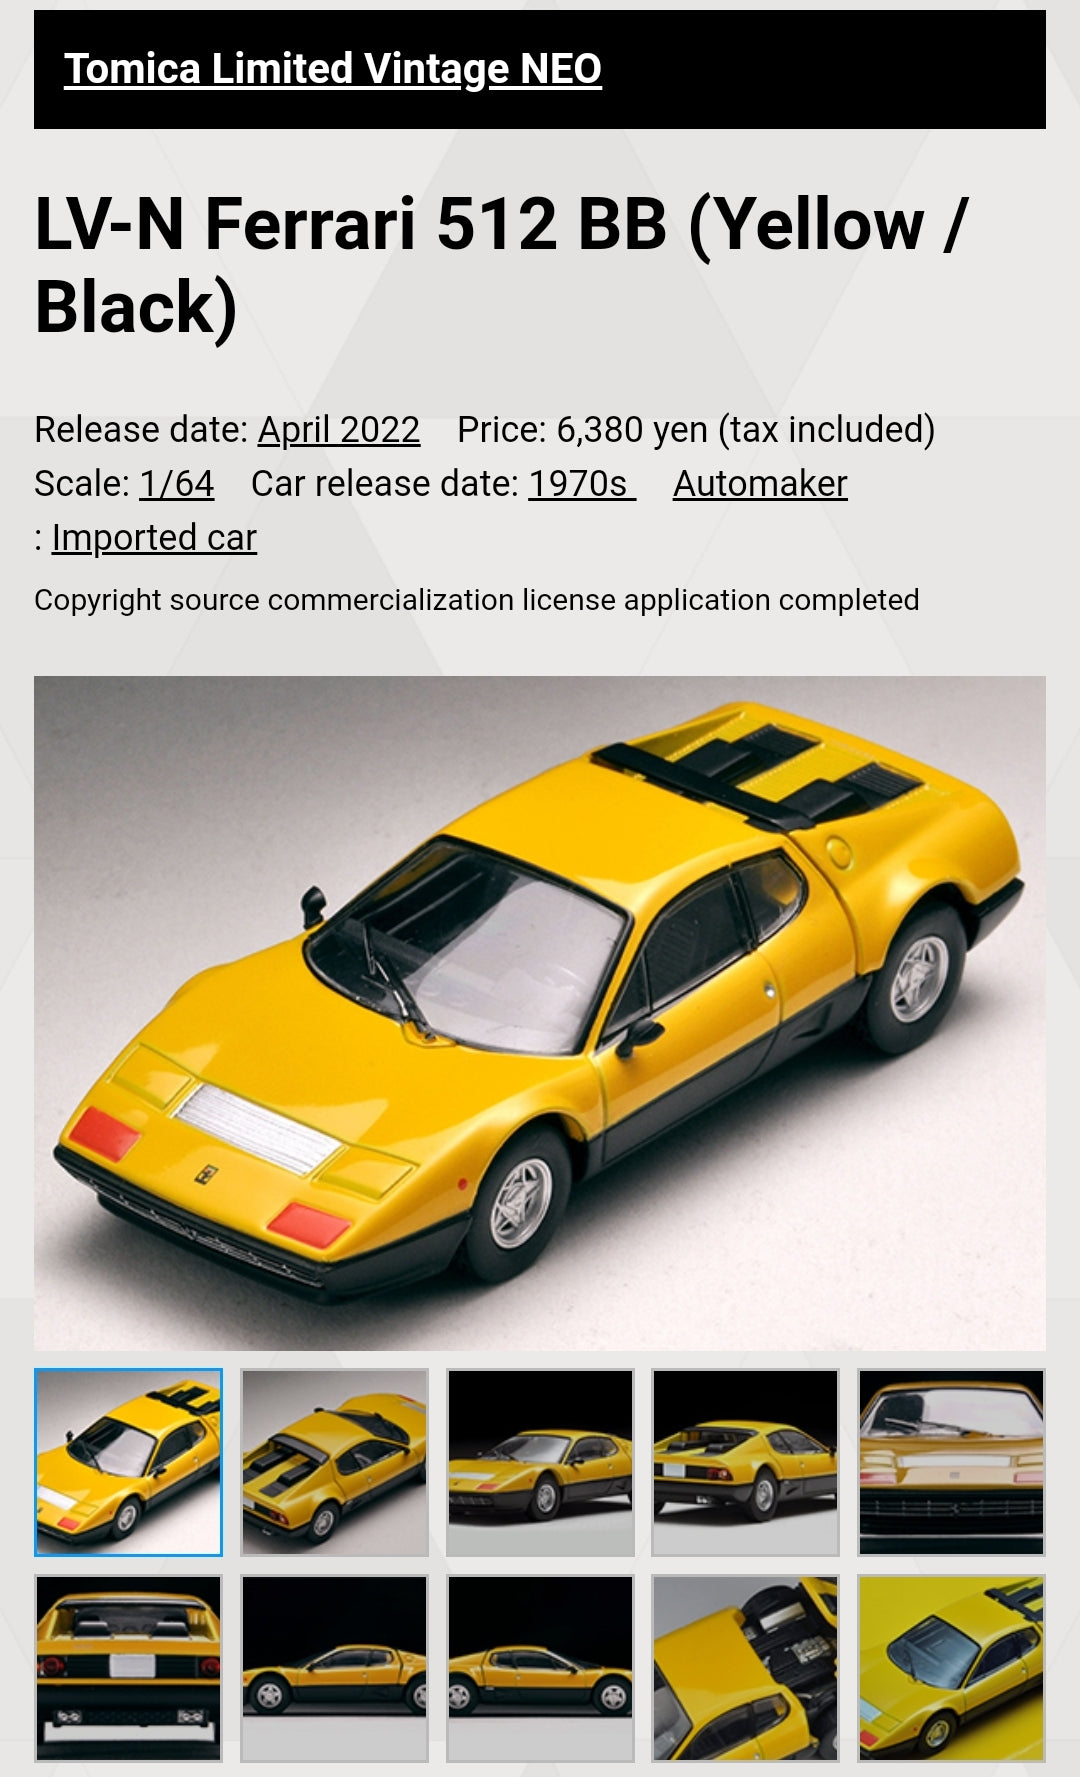 Tomica Limited Vintage Neo
Ferrari 512 BB (Yellow) Takara Tomy